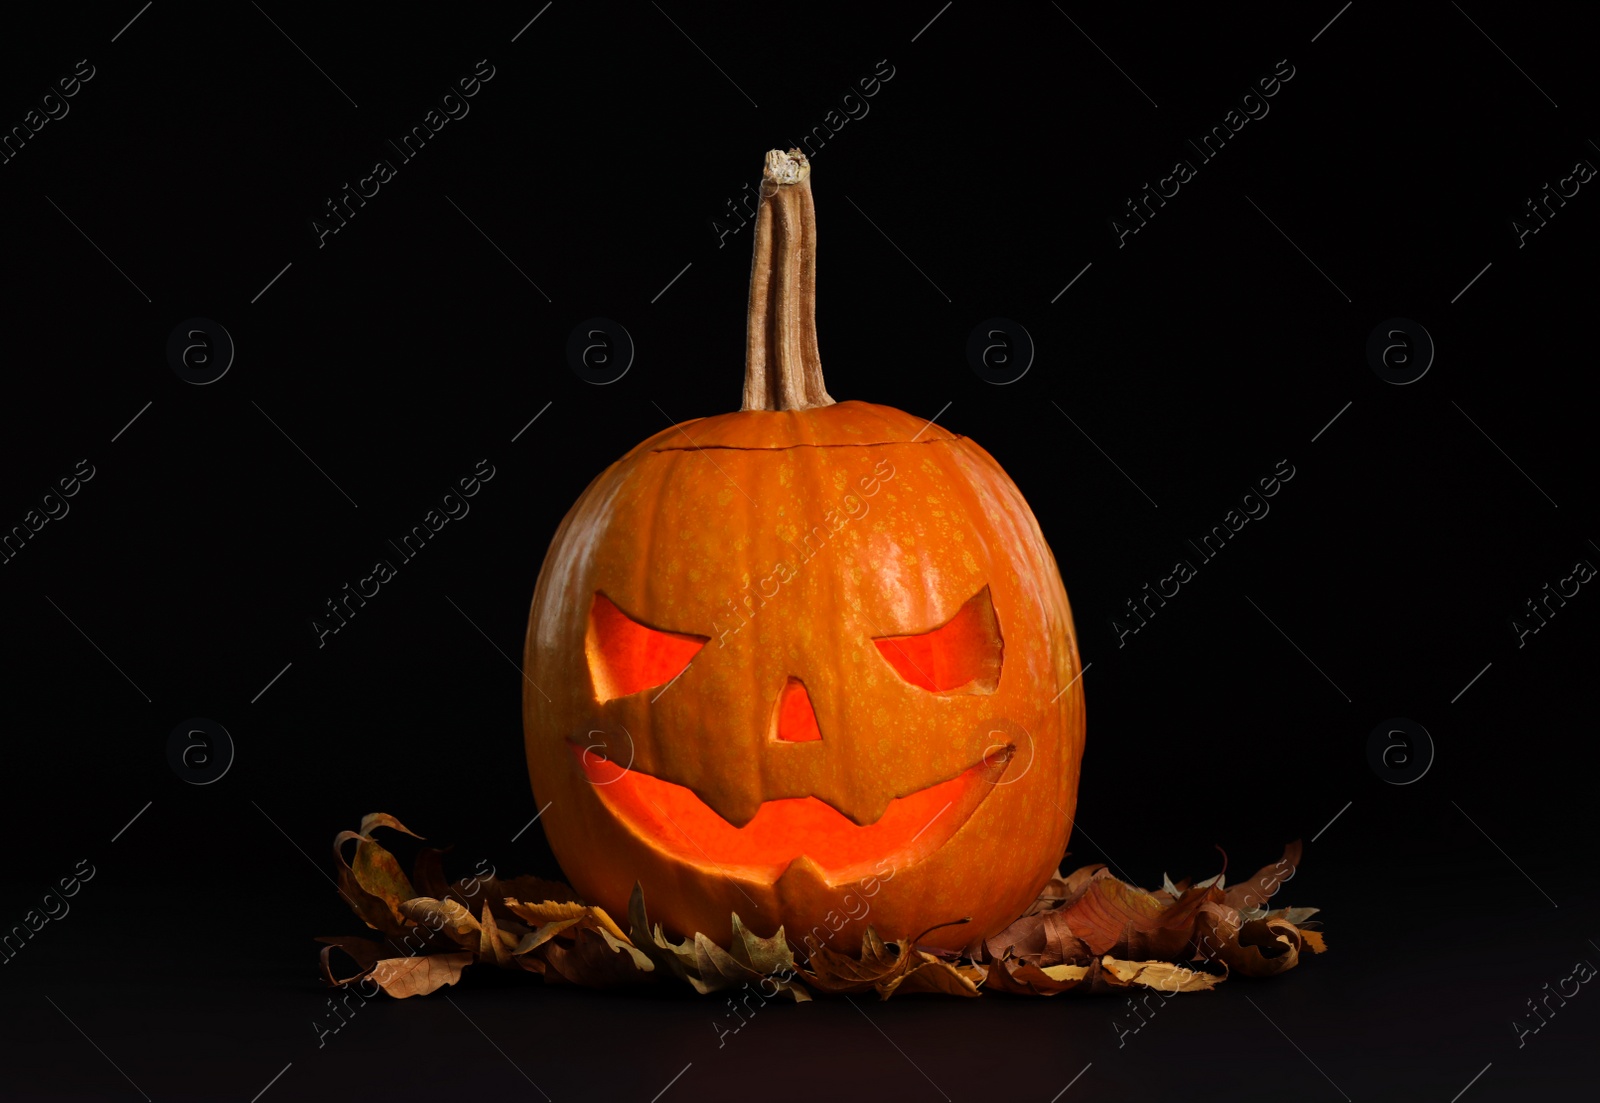 Photo of Pumpkin head with autumn leaves on black background. Jack lantern - traditional Halloween decor